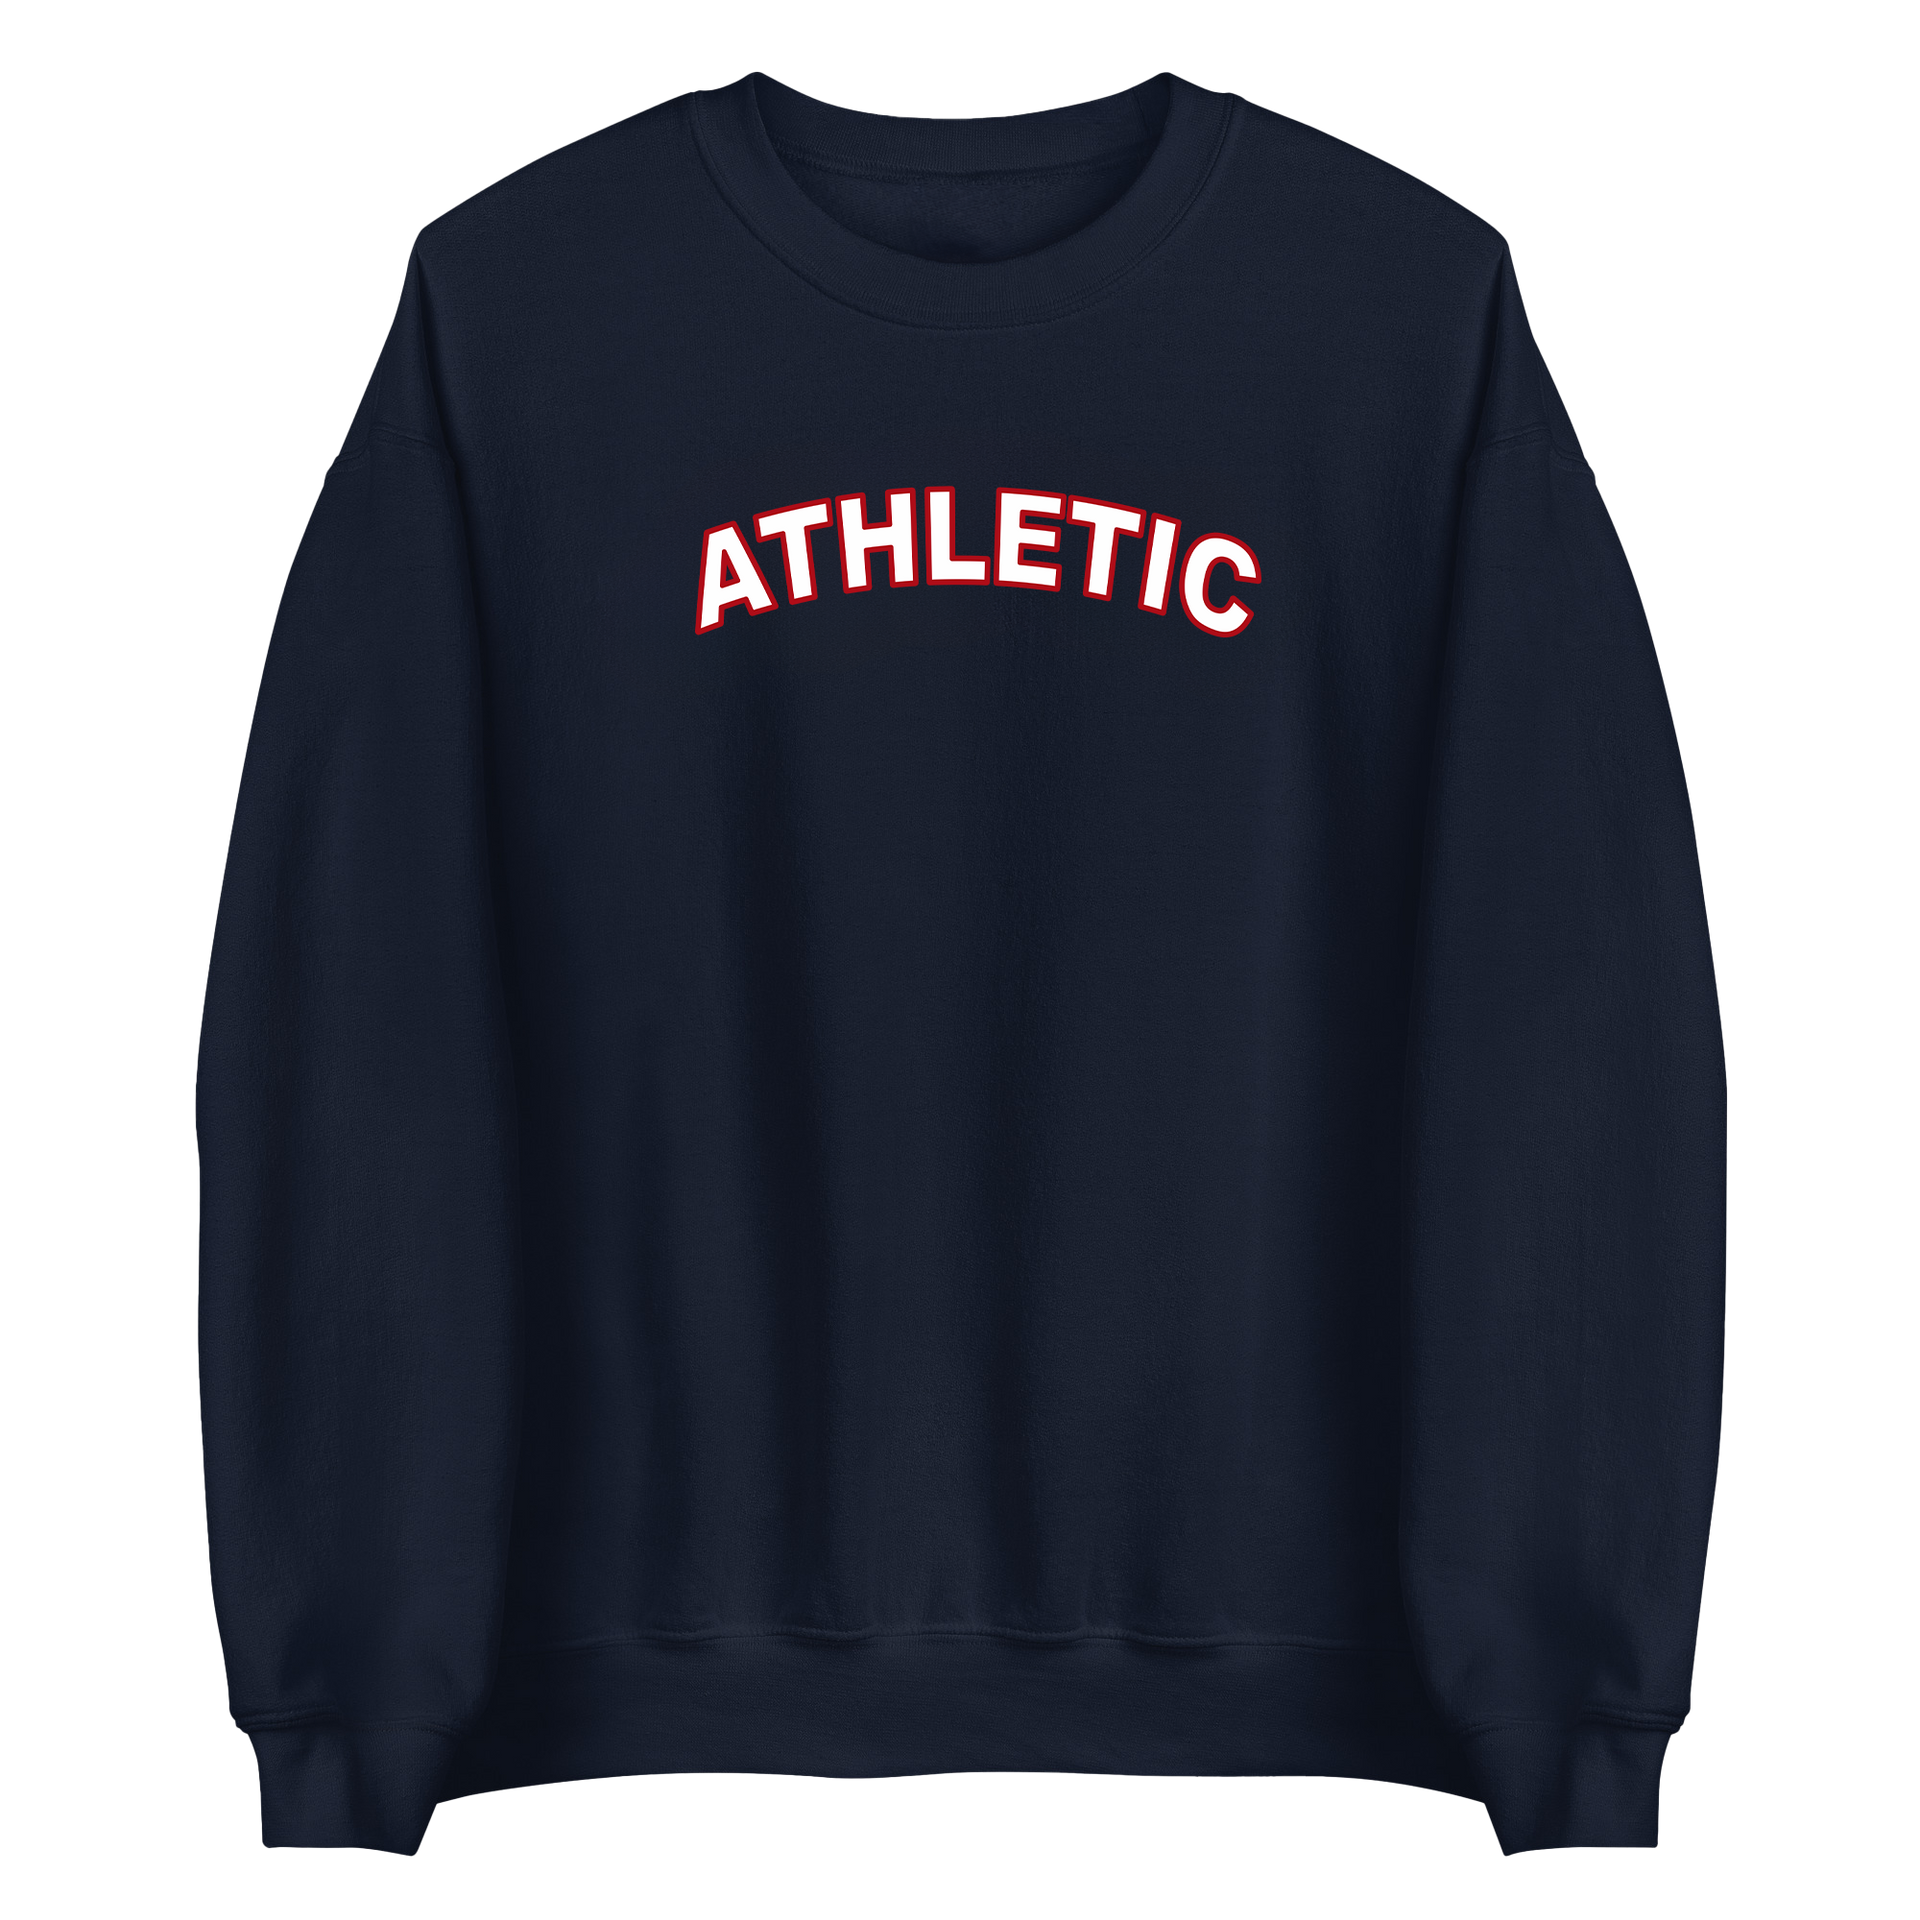 ATHLETIC Sweatshirt